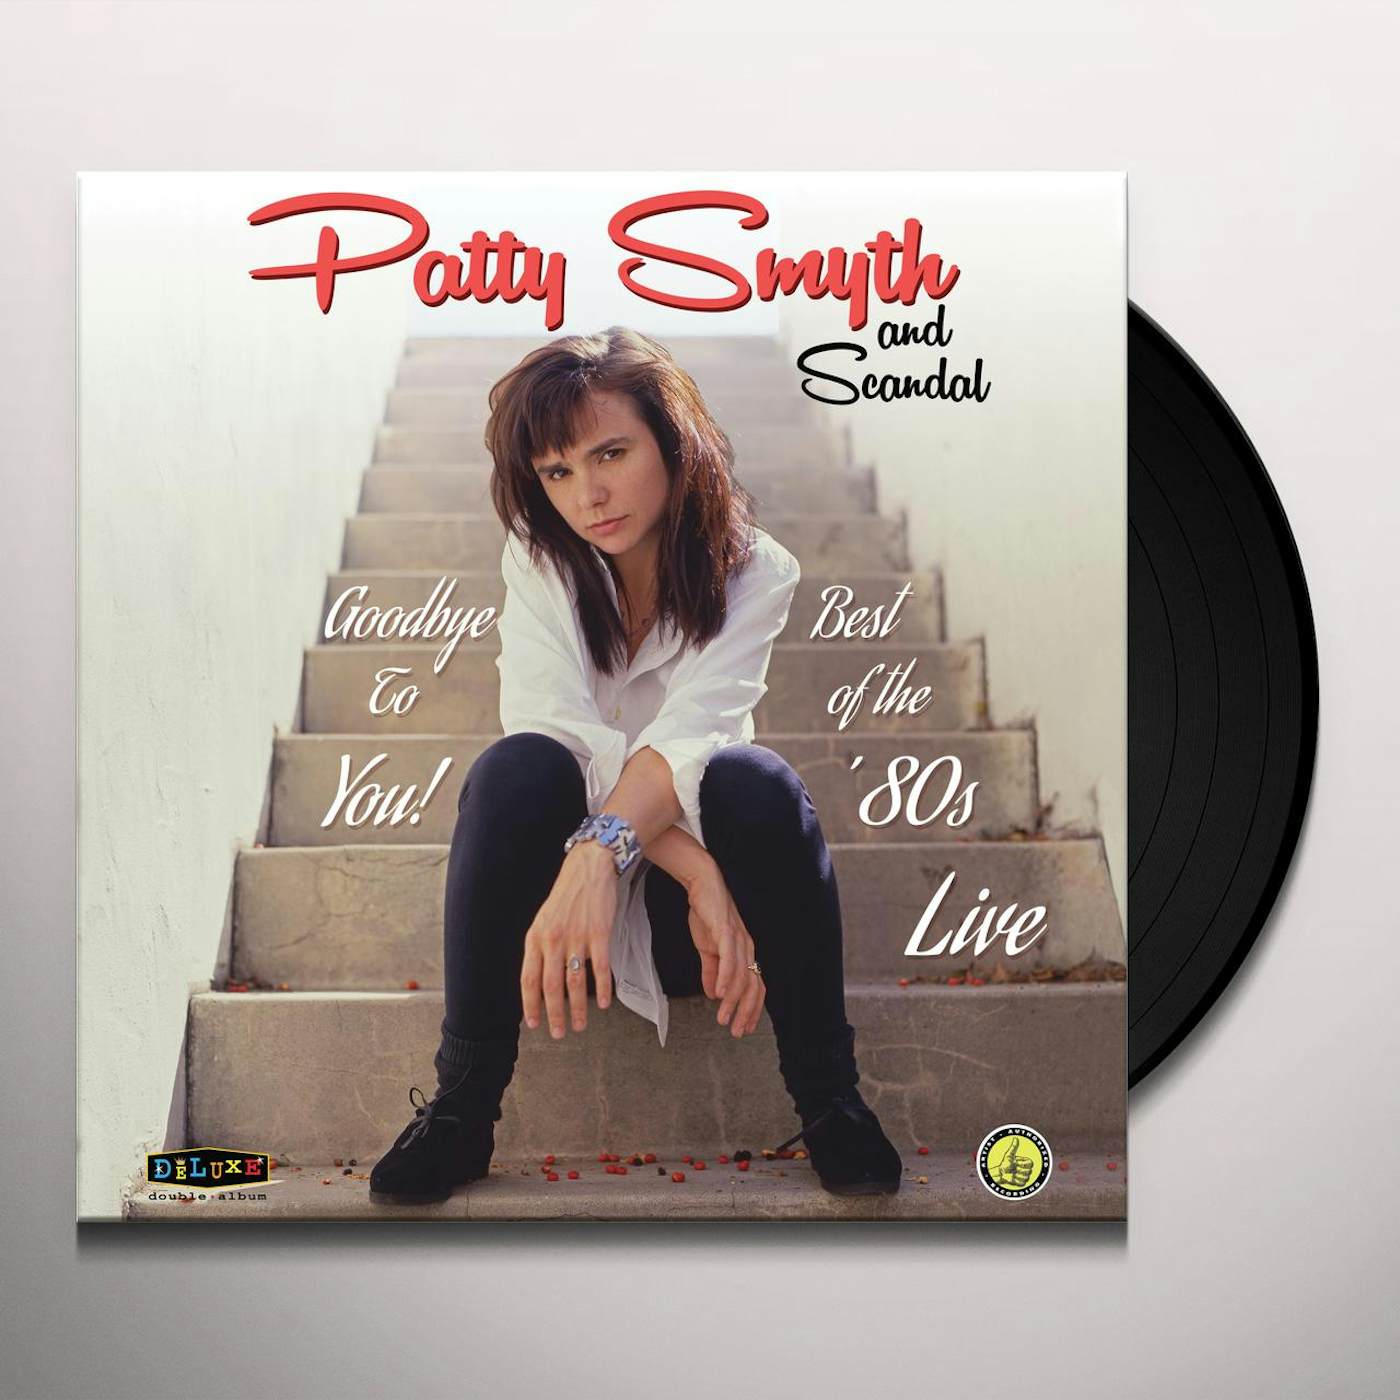 Patty Smyth Goodbye To You!: Best of The '80s Live Vinyl Record